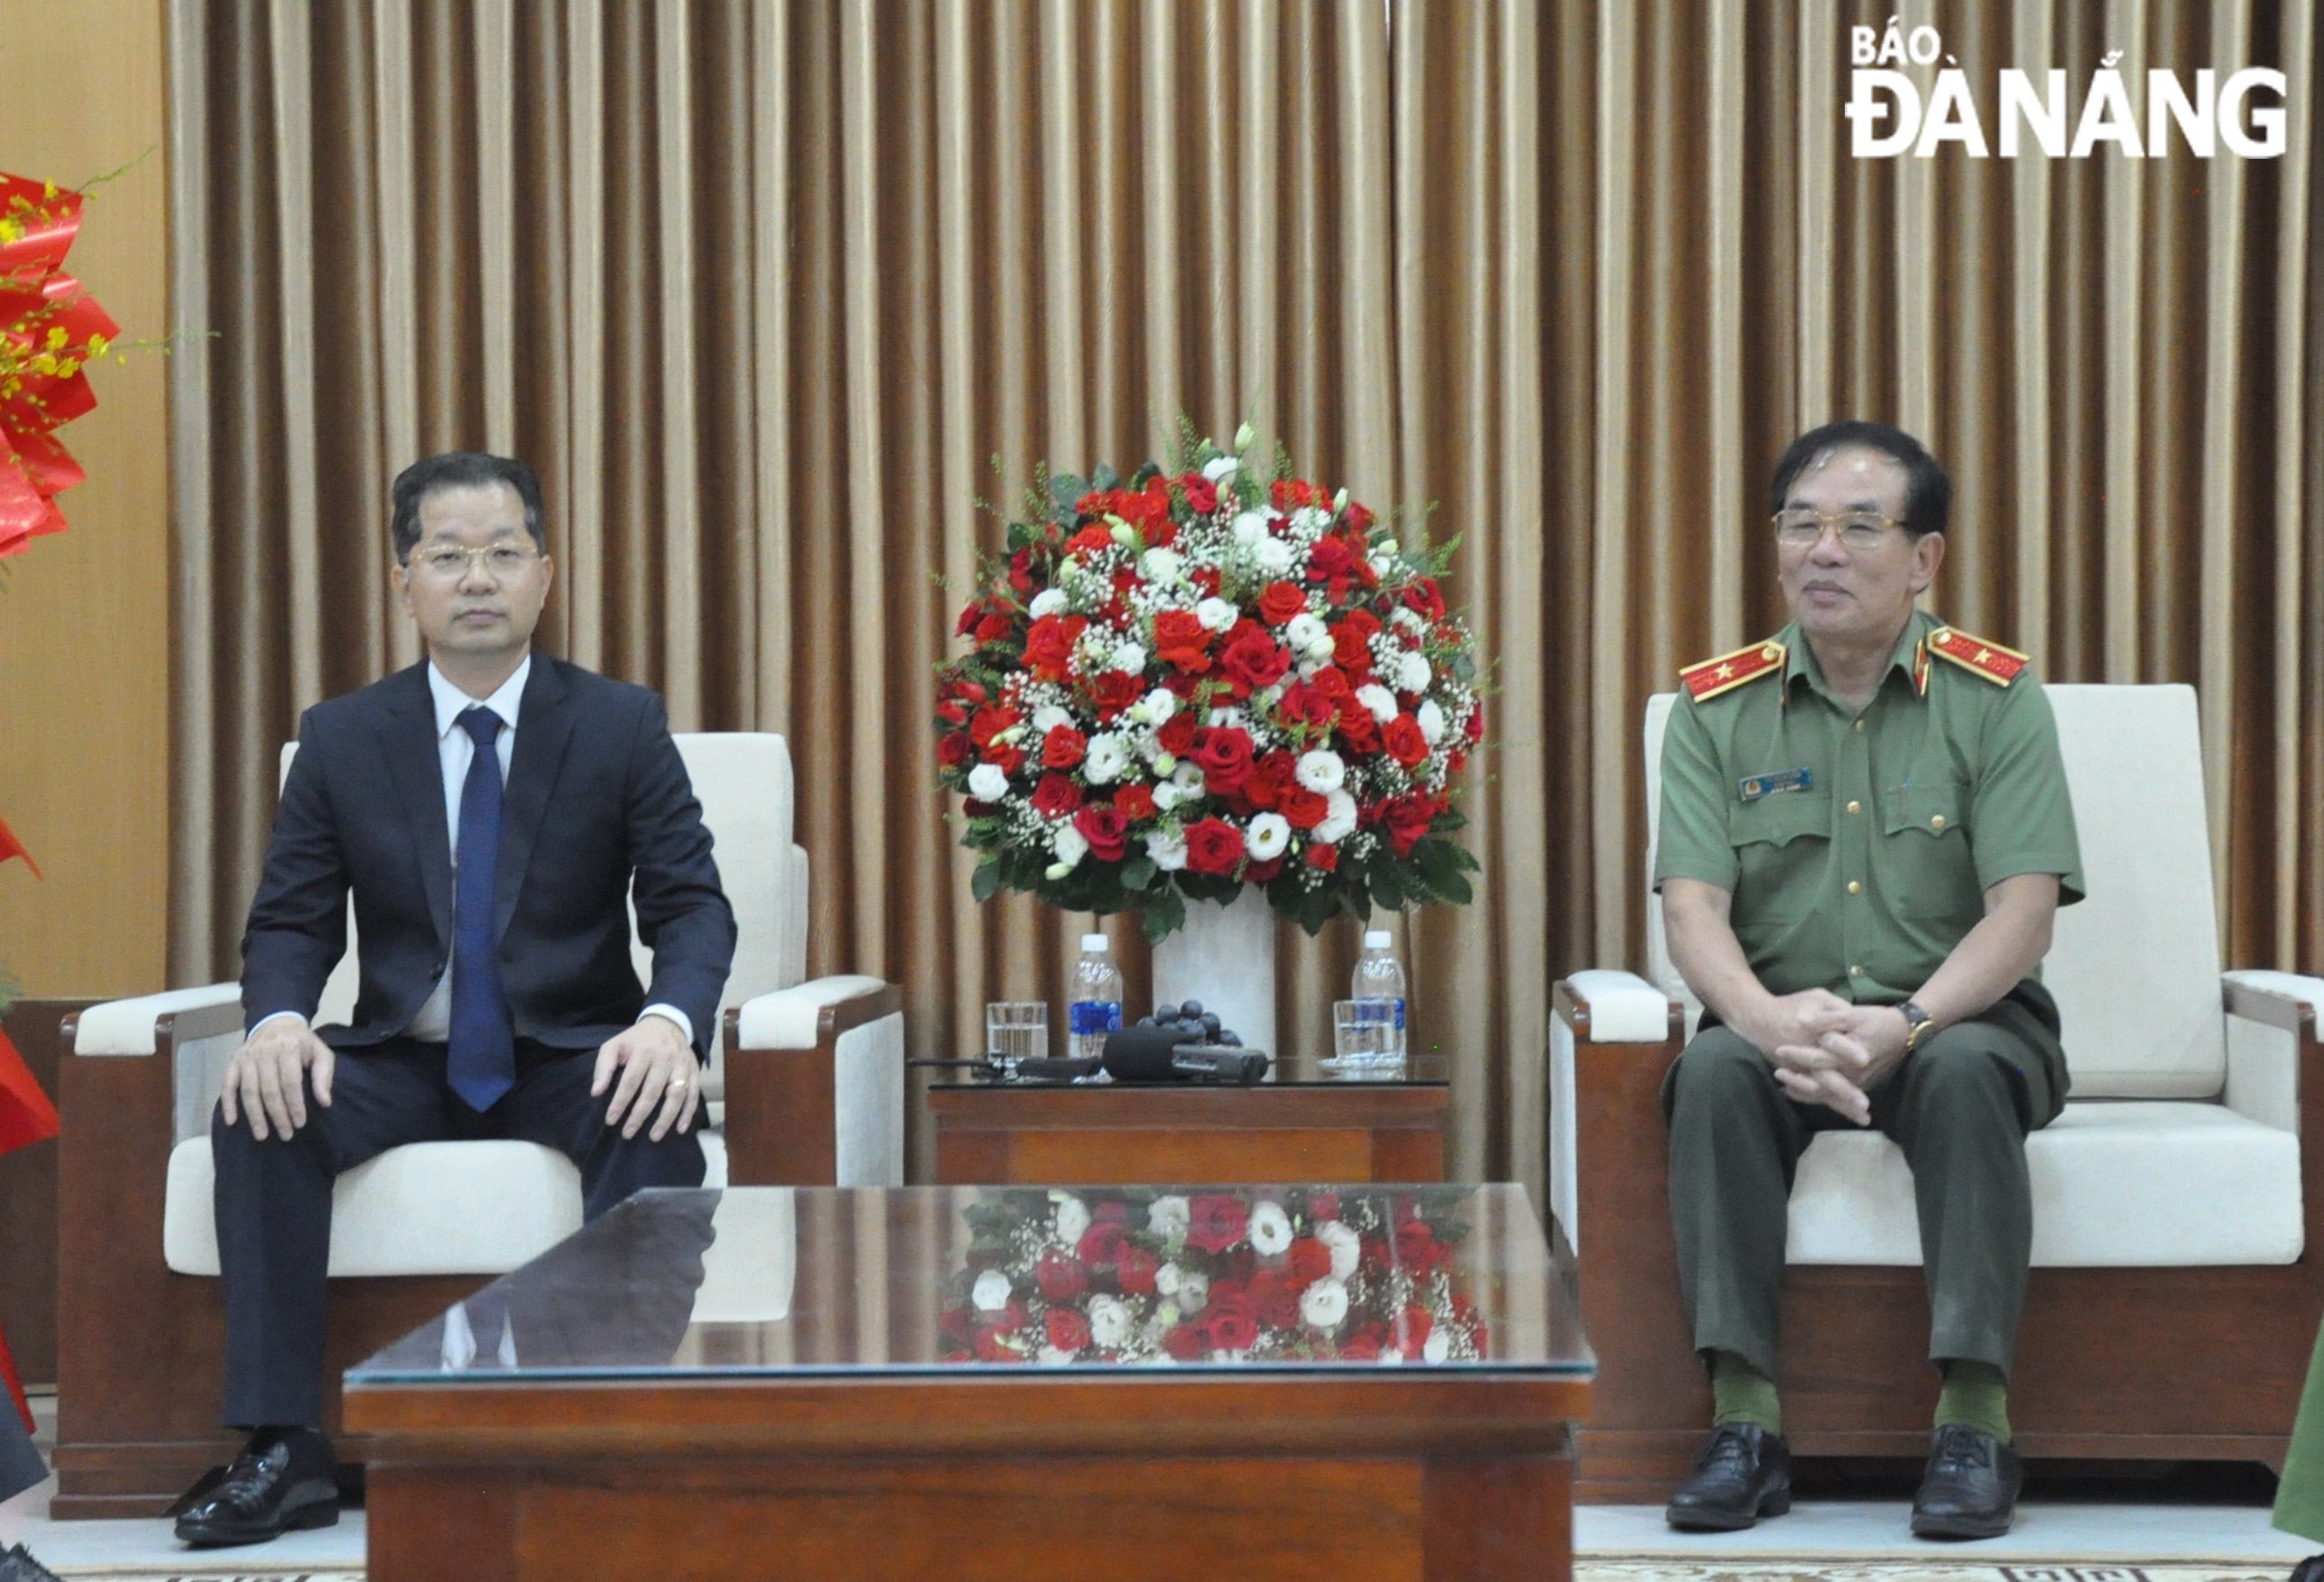 Da Nang Party Committee Secretary Nguyen Van Quang (left) and Major General Vu Xuan Vien